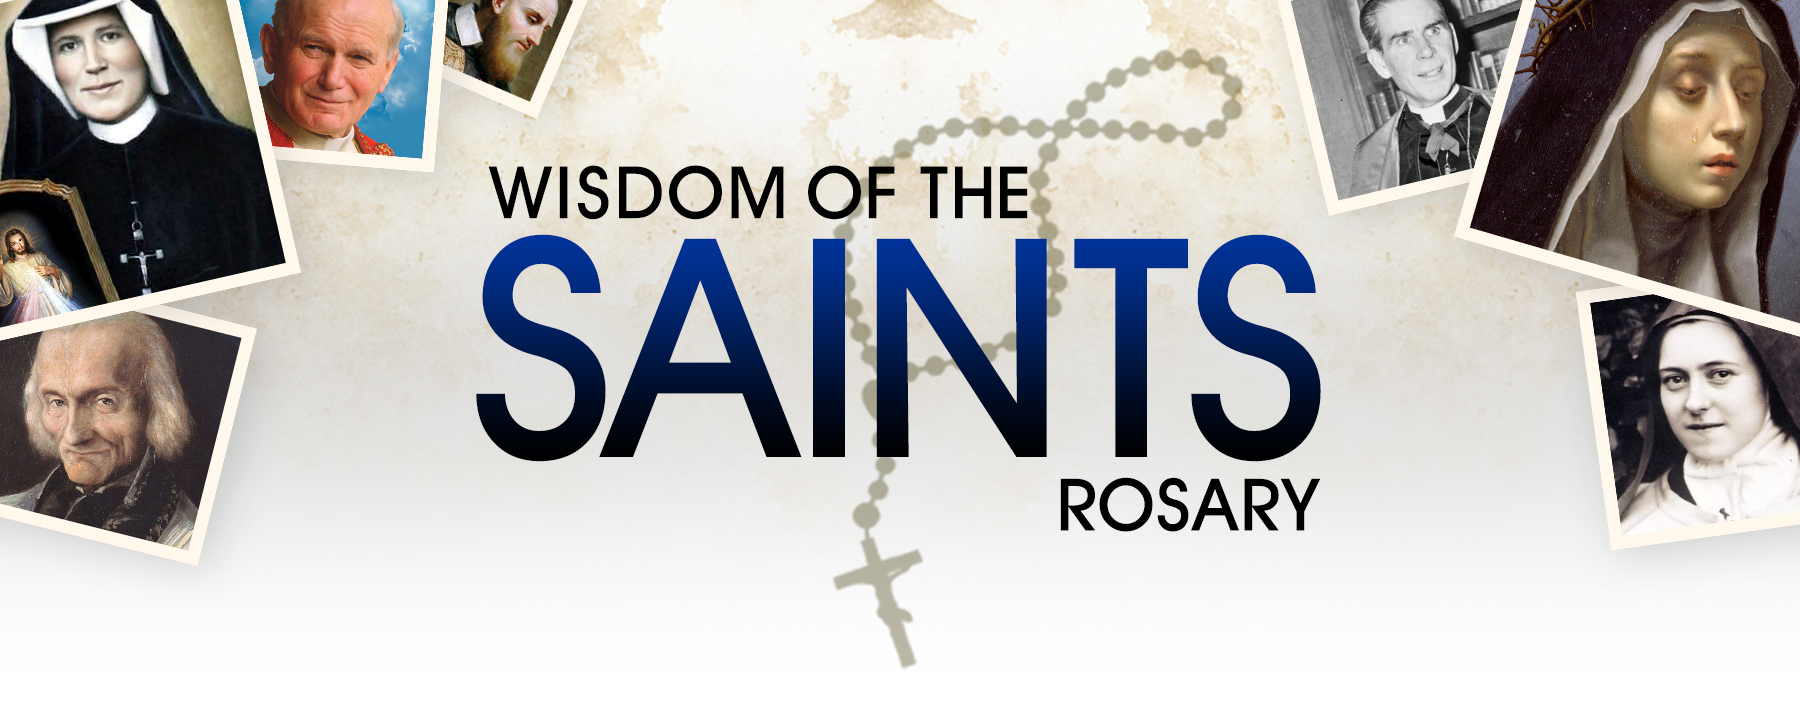 Wisdom of the Saints Rosary